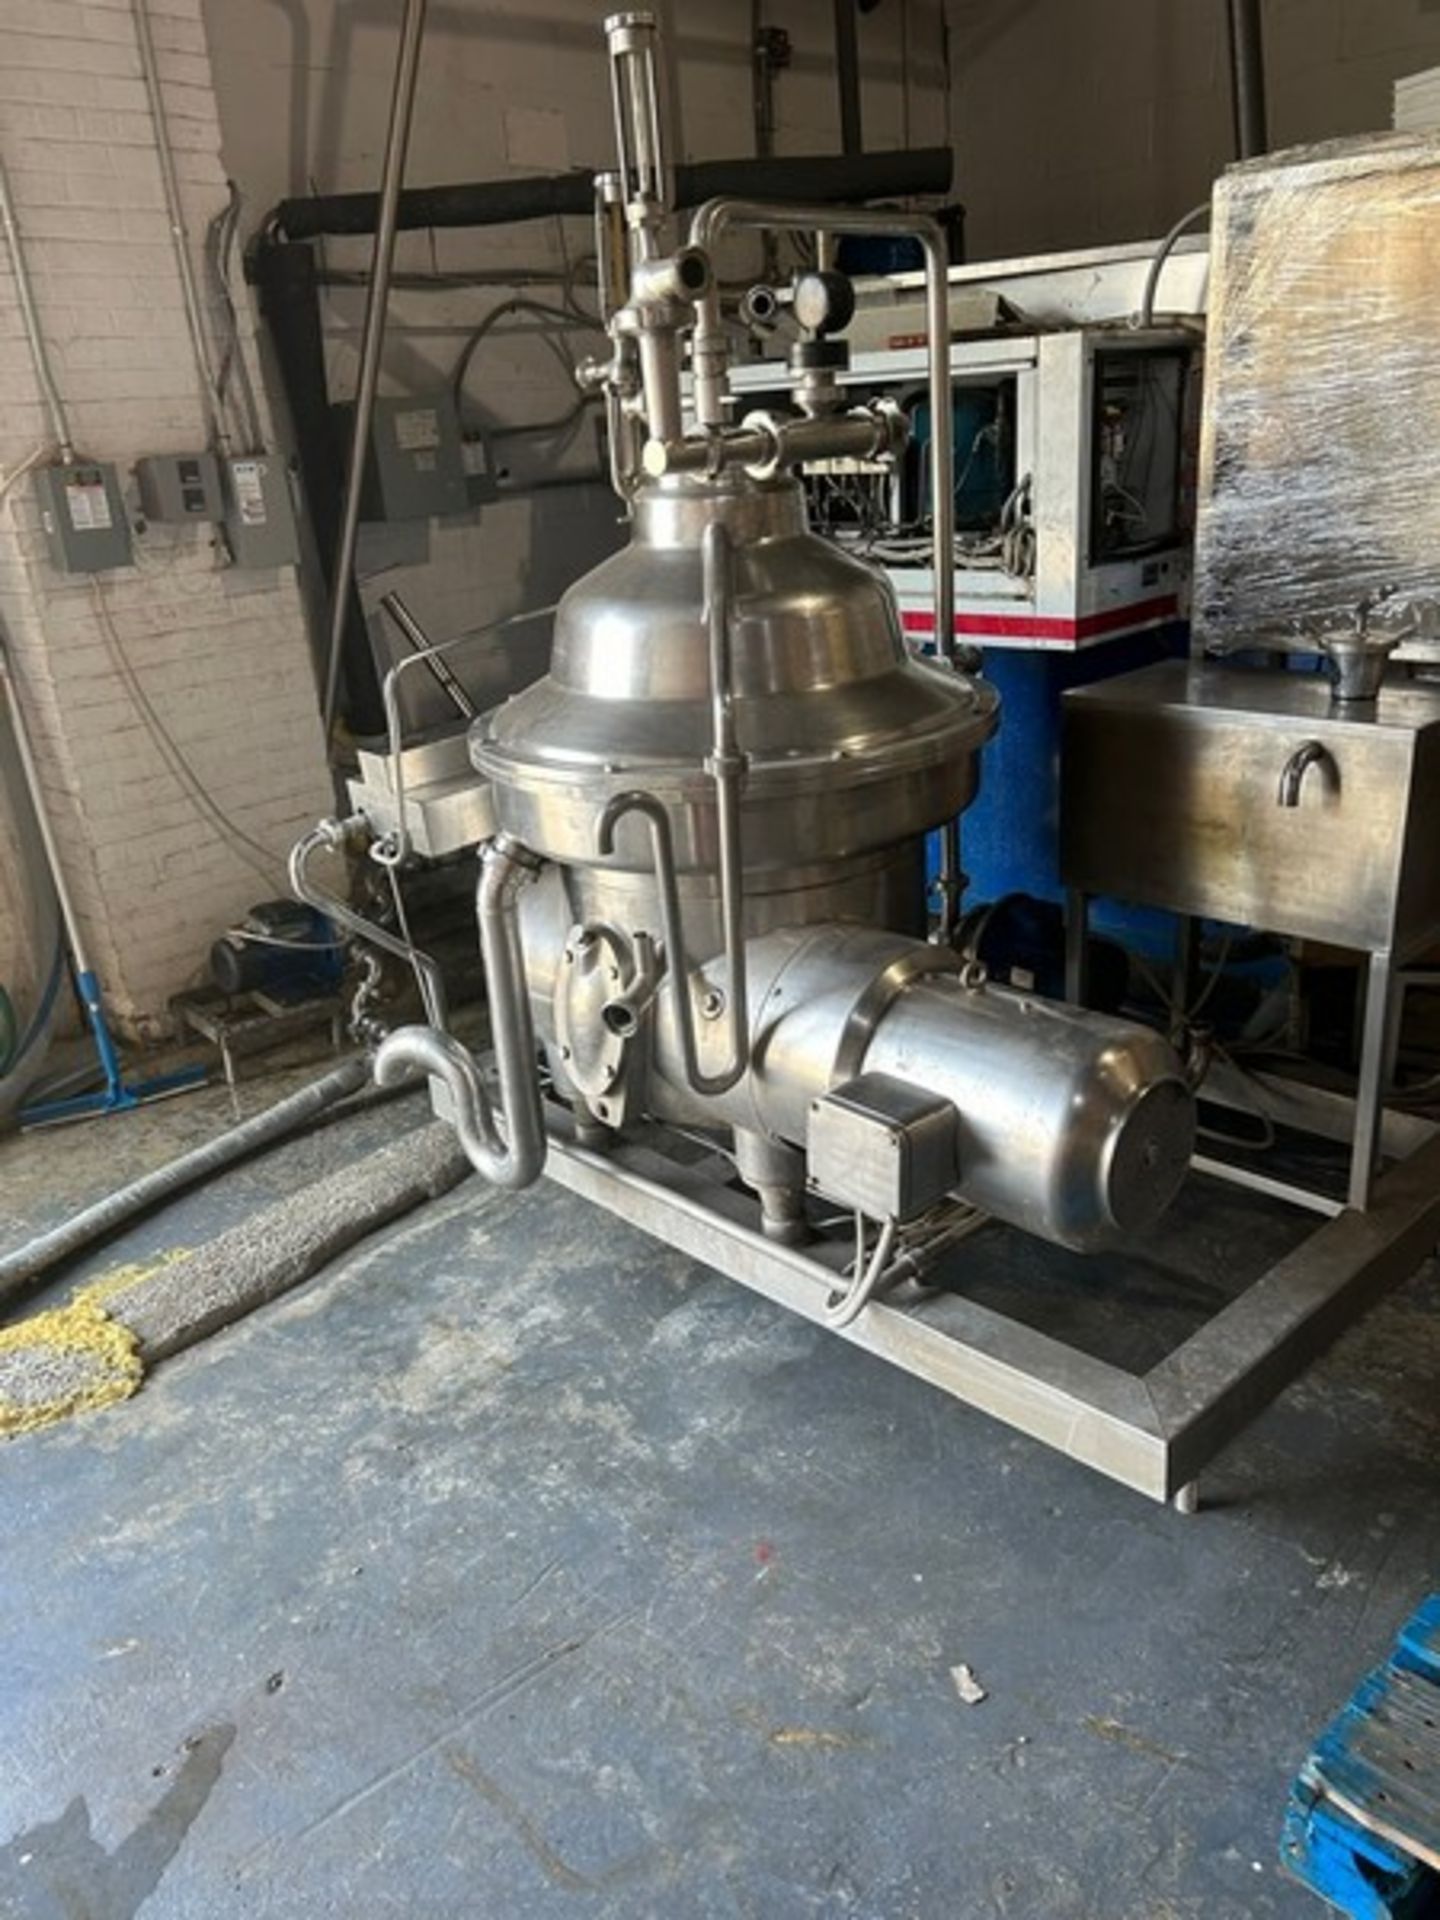 Westfalia CIP Milk Separator, Model SAMM 7006, S/N 1650946 - 316 SS (Located Rahway, NJ)